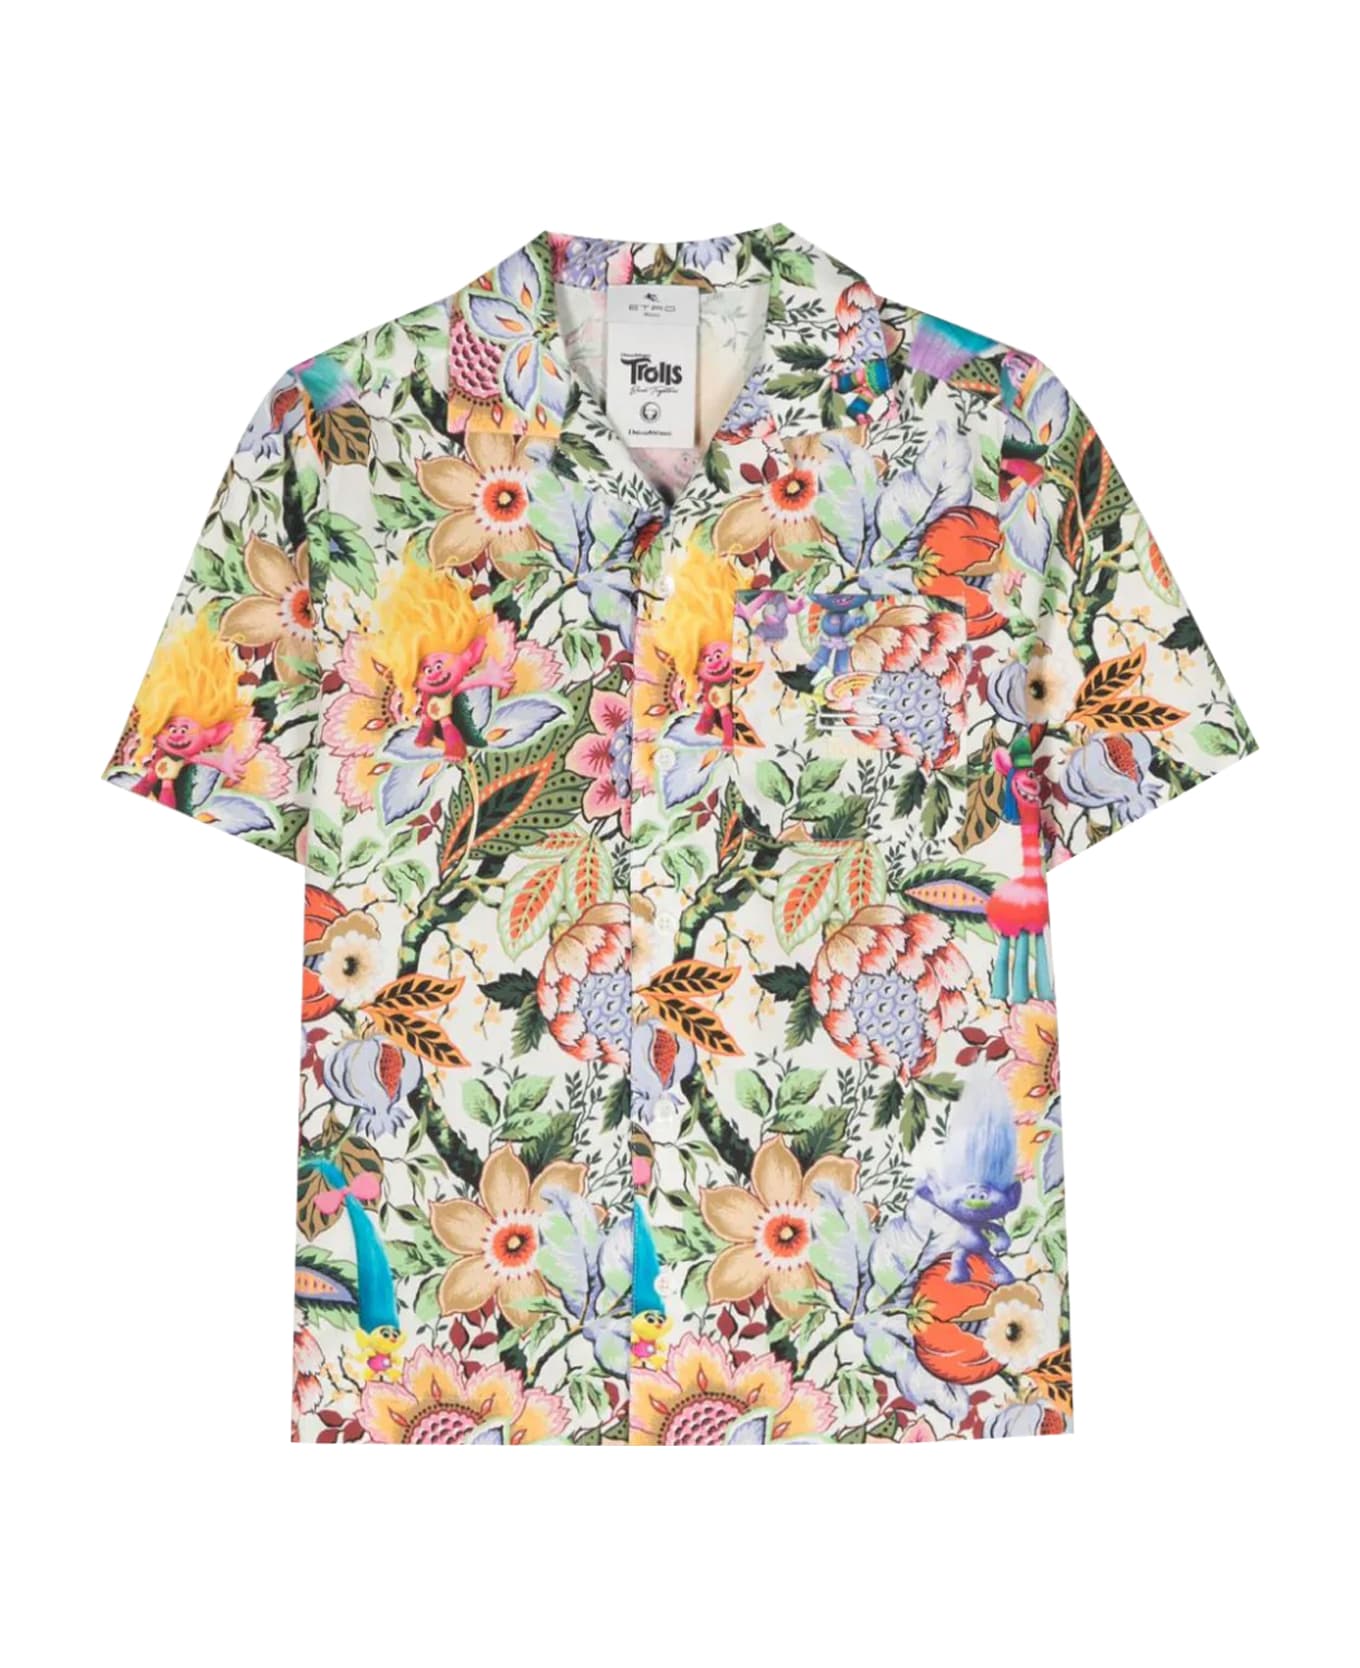 Etro Trolls Shirt - Multicolor